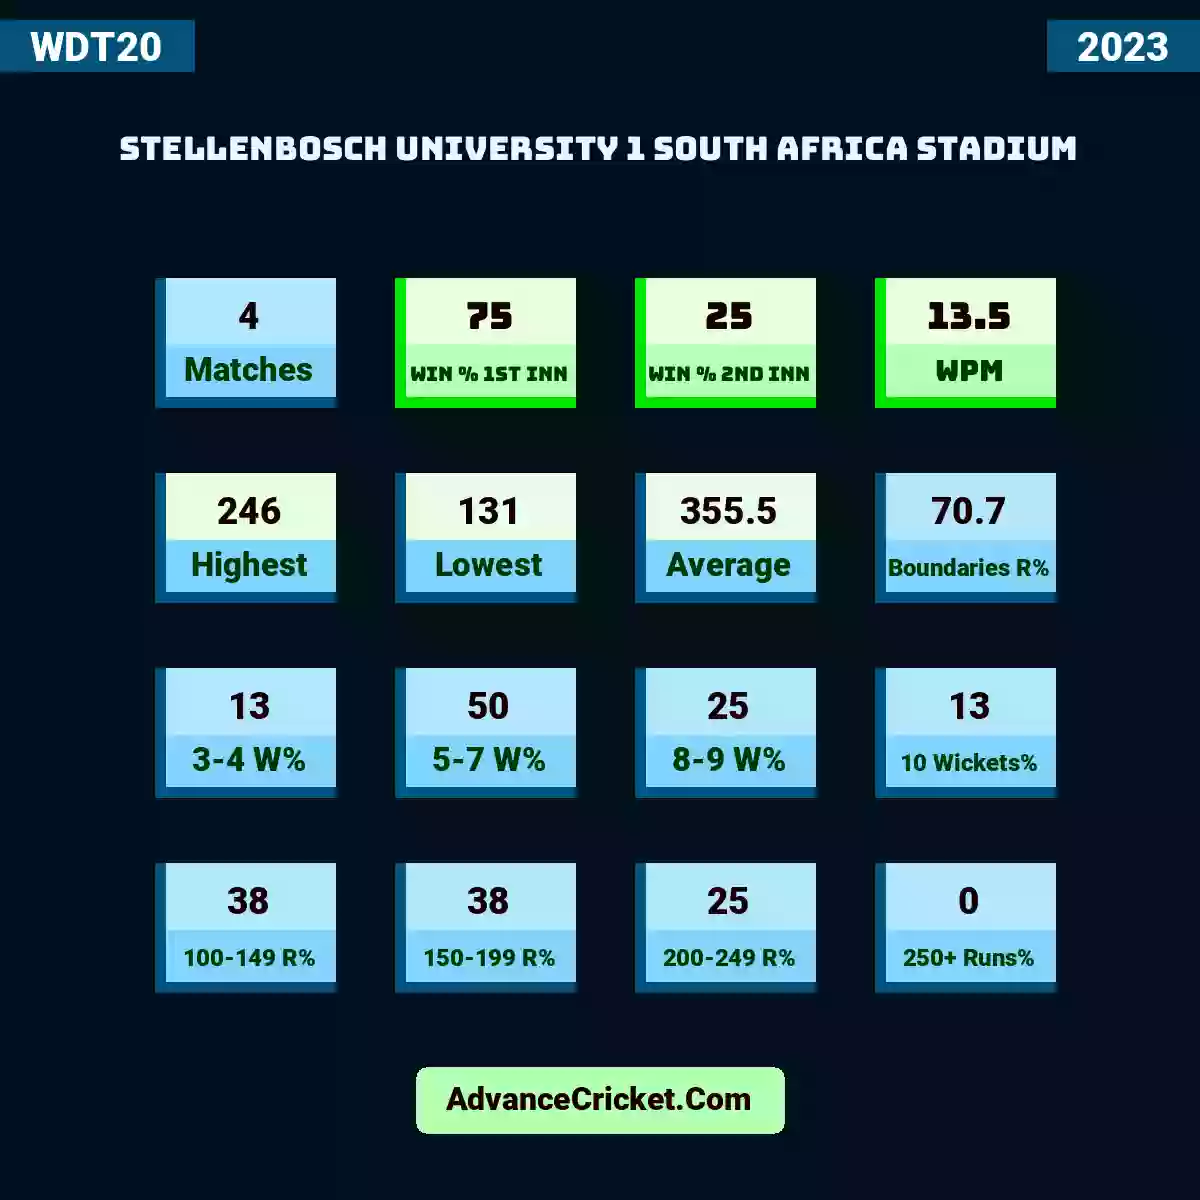 Image showing Stellenbosch University 1 South Africa Stadium with Matches: 4, Win % 1st Inn: 75, Win % 2nd Inn: 25, WPM: 13.5, Highest: 246, Lowest: 131, Average: 355.5, Boundaries R%: 70.7, 3-4 W%: 13, 5-7 W%: 50, 8-9 W%: 25, 10 Wickets%: 13, 100-149 R%: 38, 150-199 R%: 38, 200-249 R%: 25, 250+ Run